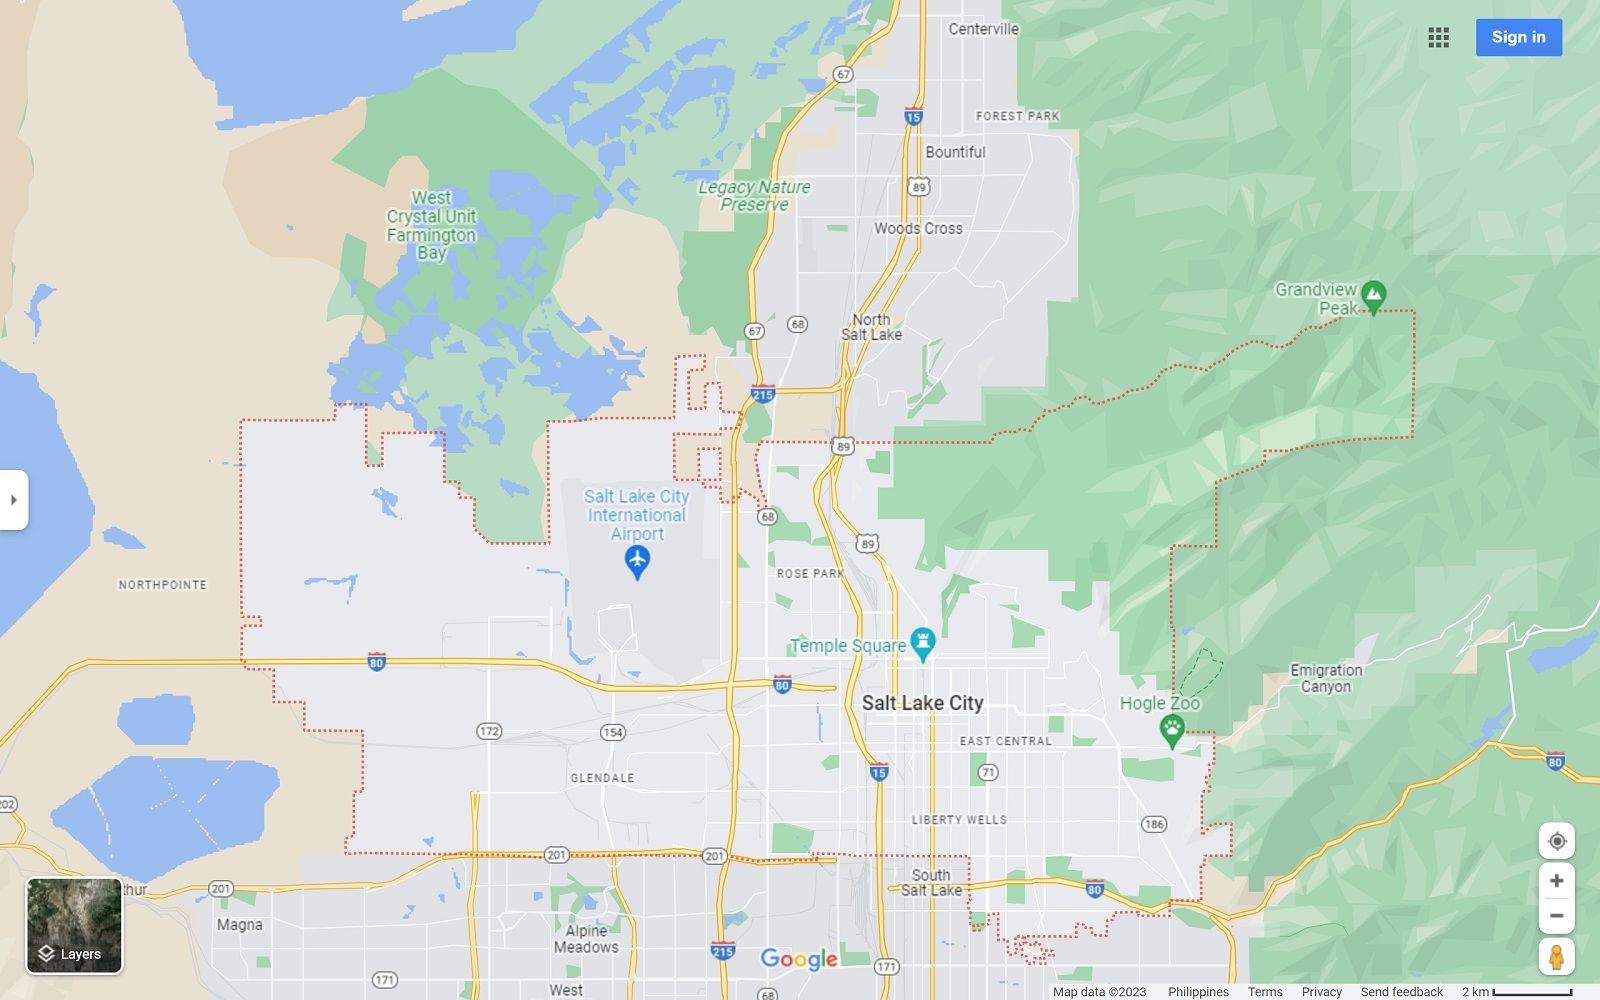 Salt Lake City UT map